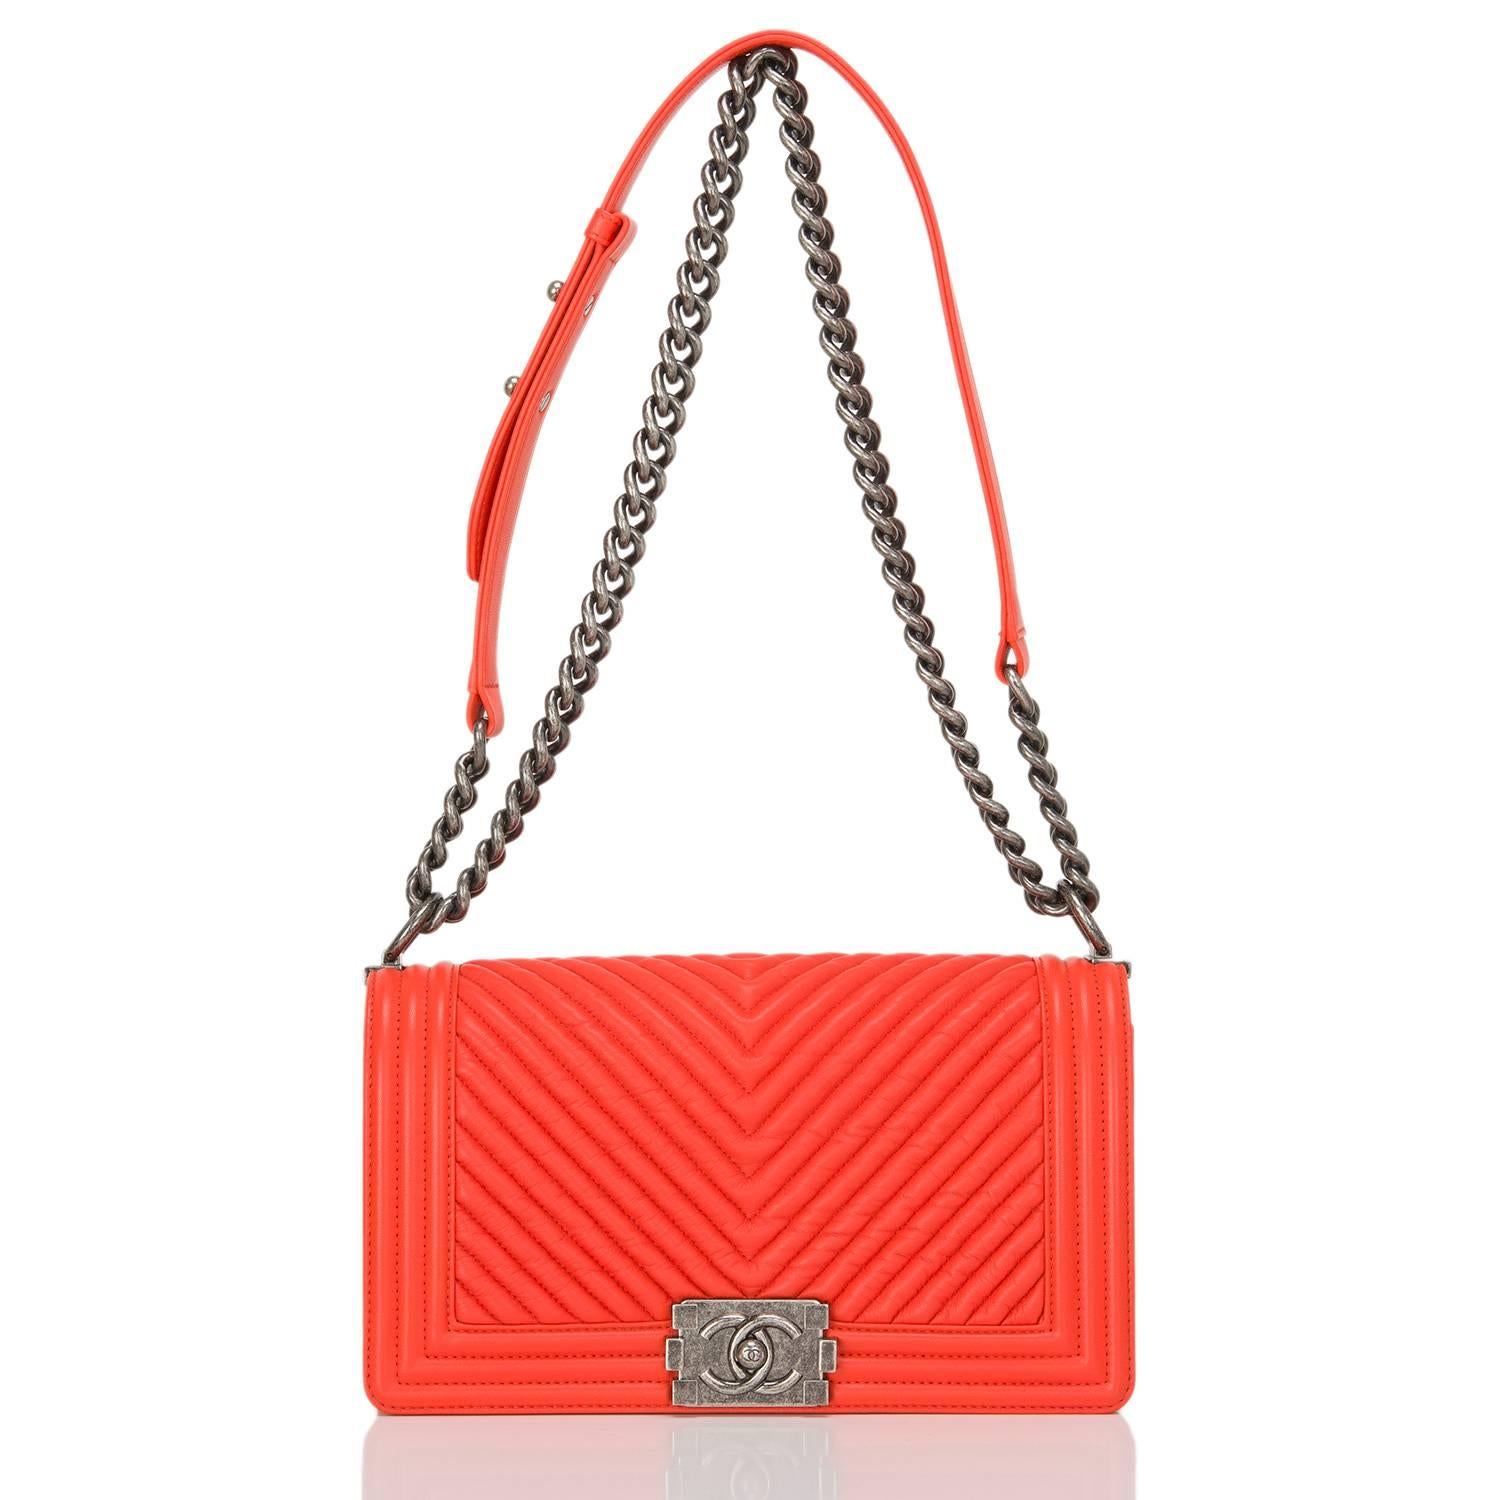 Chanel Orange Chevron Medium Boy Bag In New Condition For Sale In New York, NY